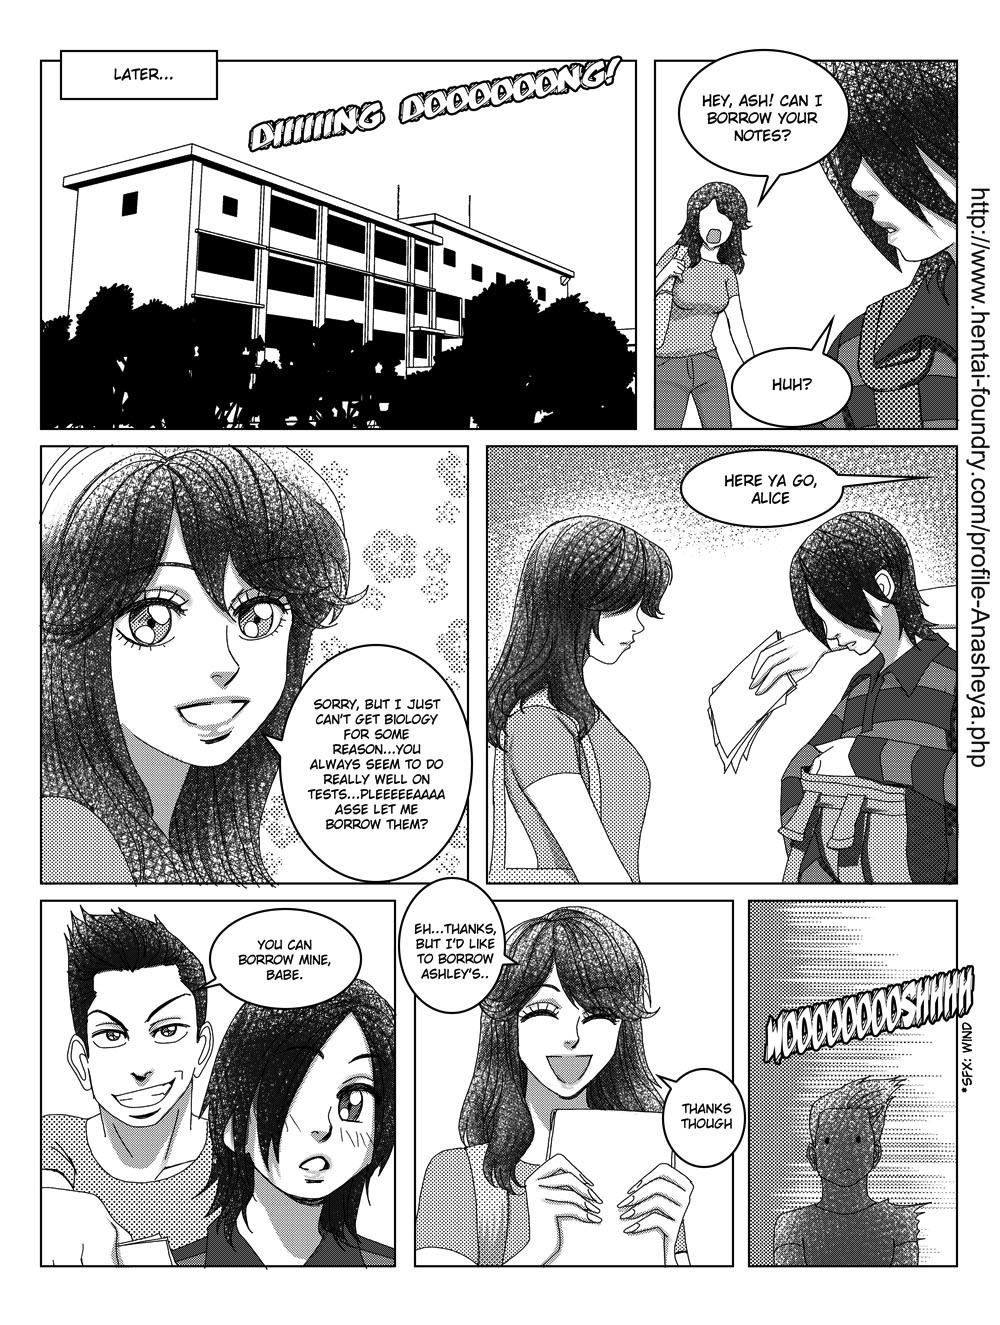 Read Anasheya Anal Assault Lesson Hentai Porns Manga And Porncomics Xxx